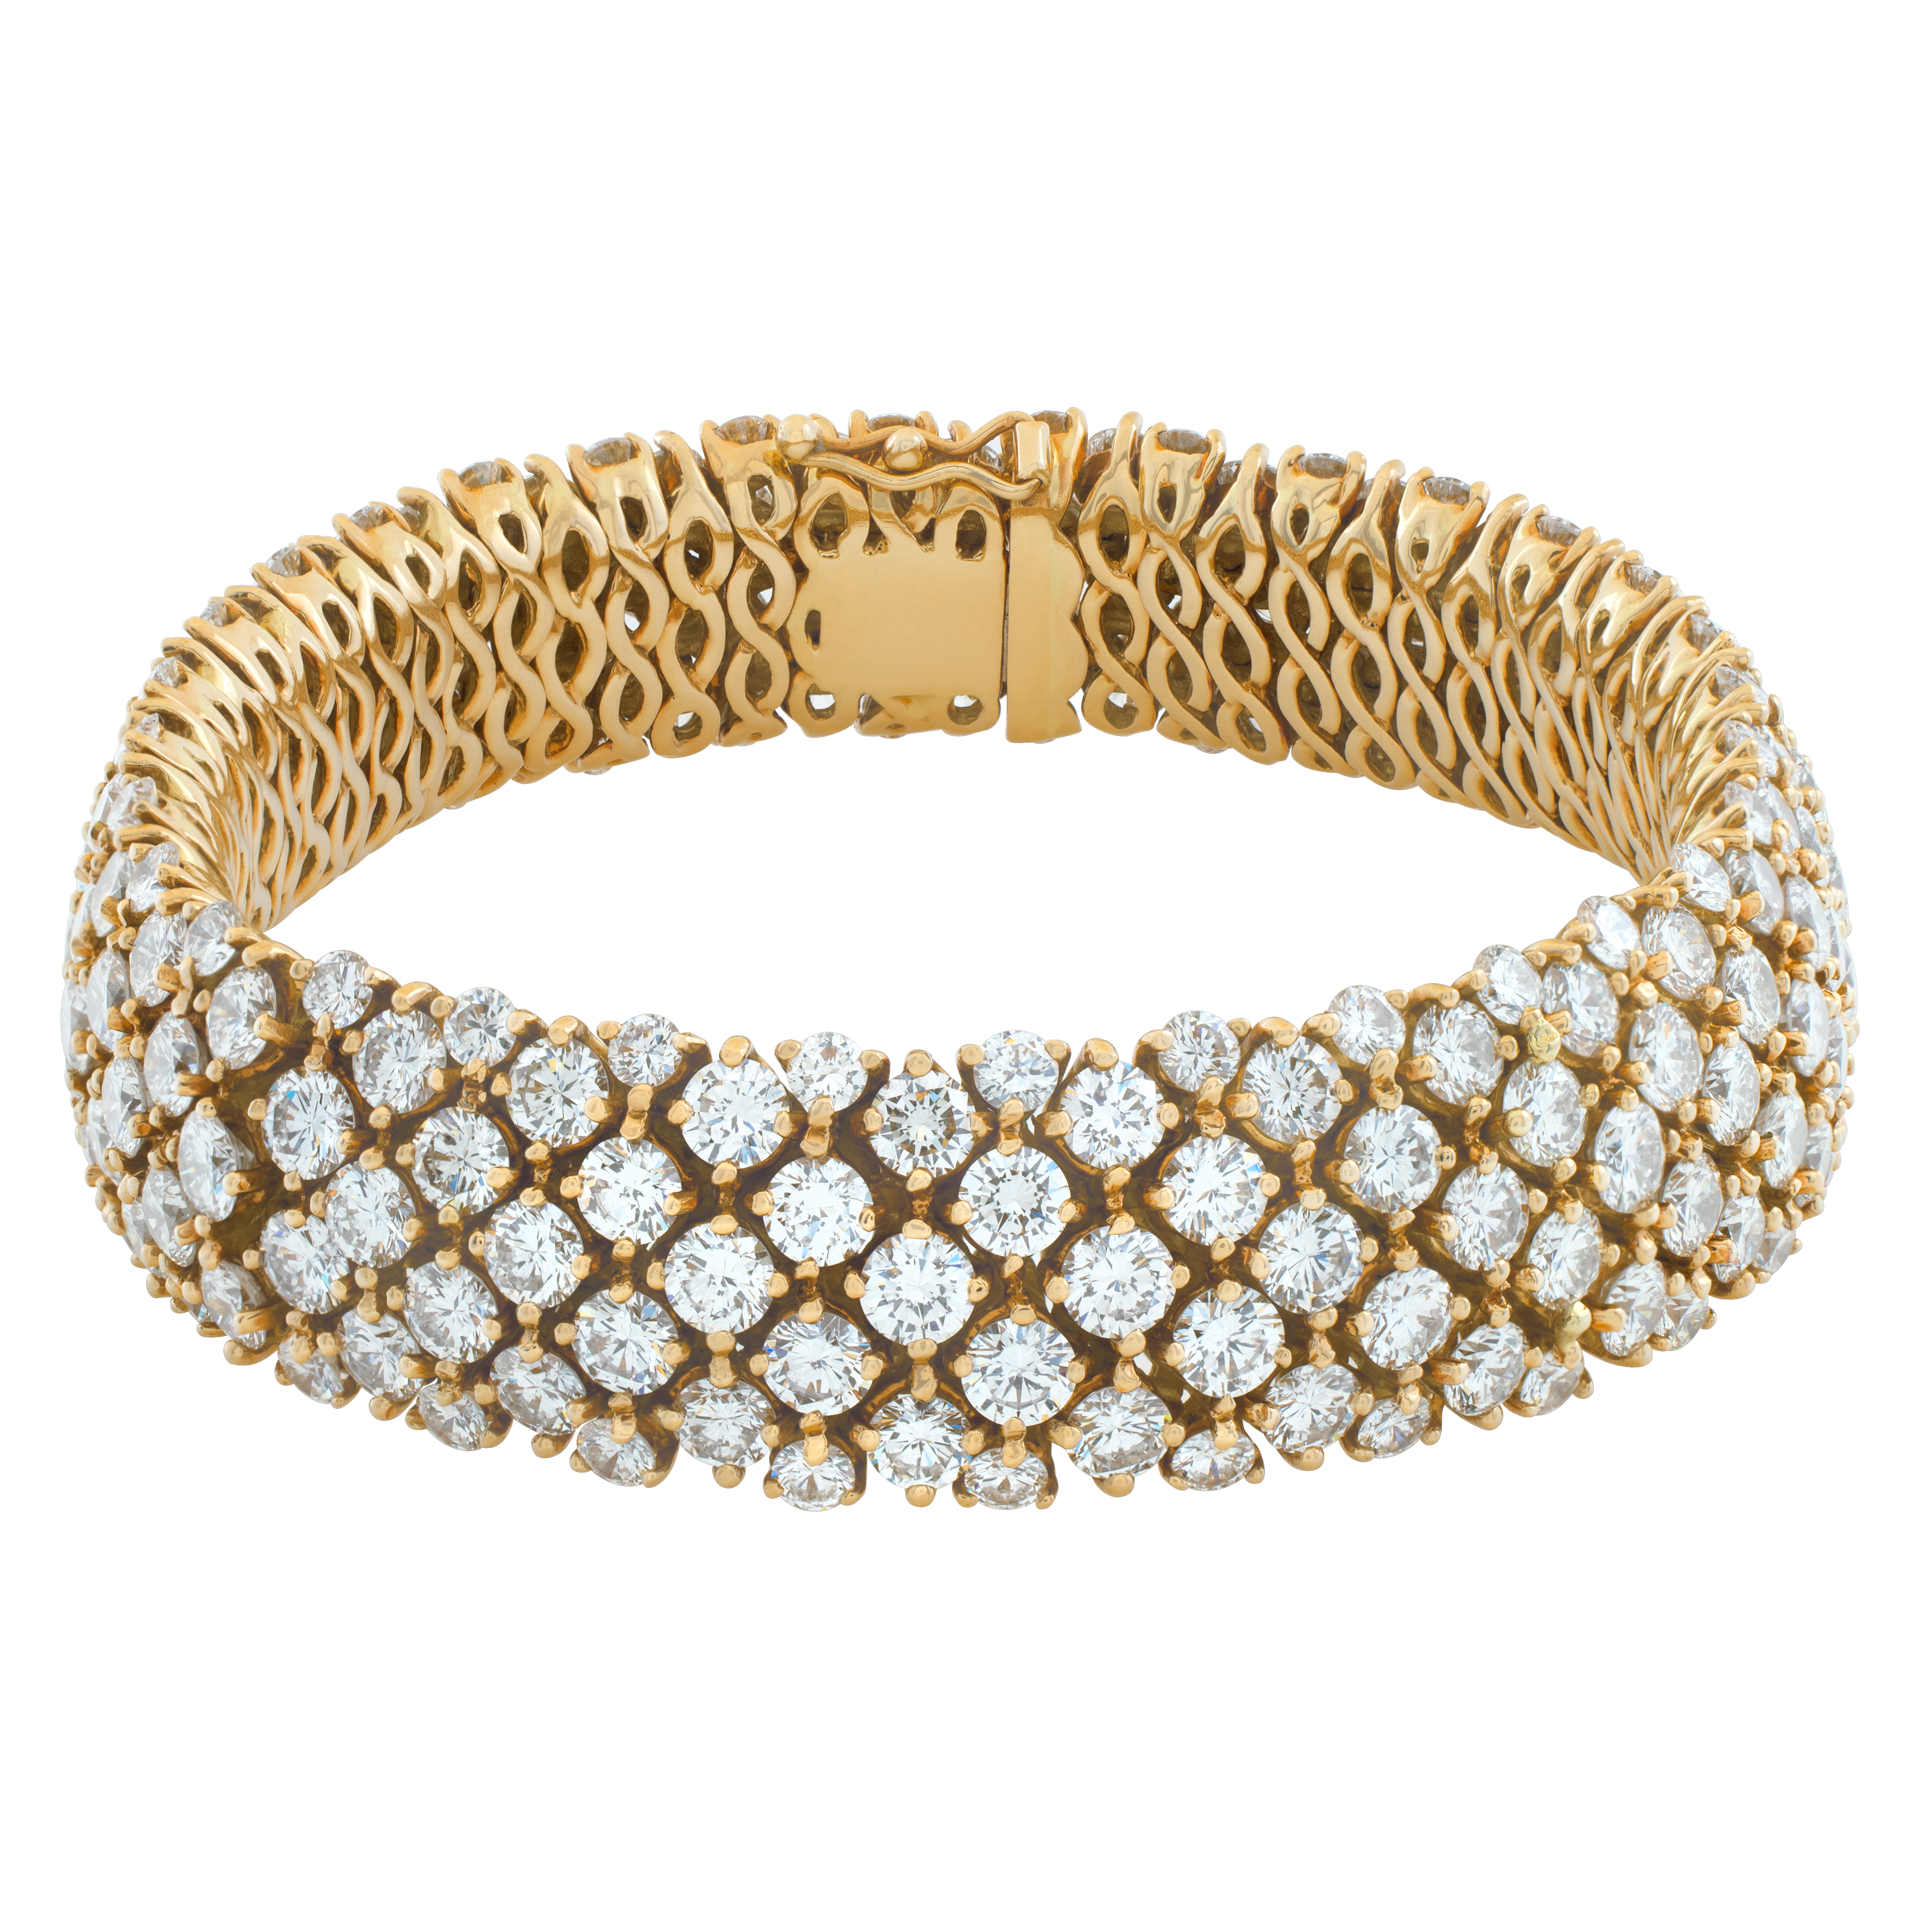 Diamonds bracelet with over 35 carats round brilliant cut diamonds, set in 18K gold. image 1